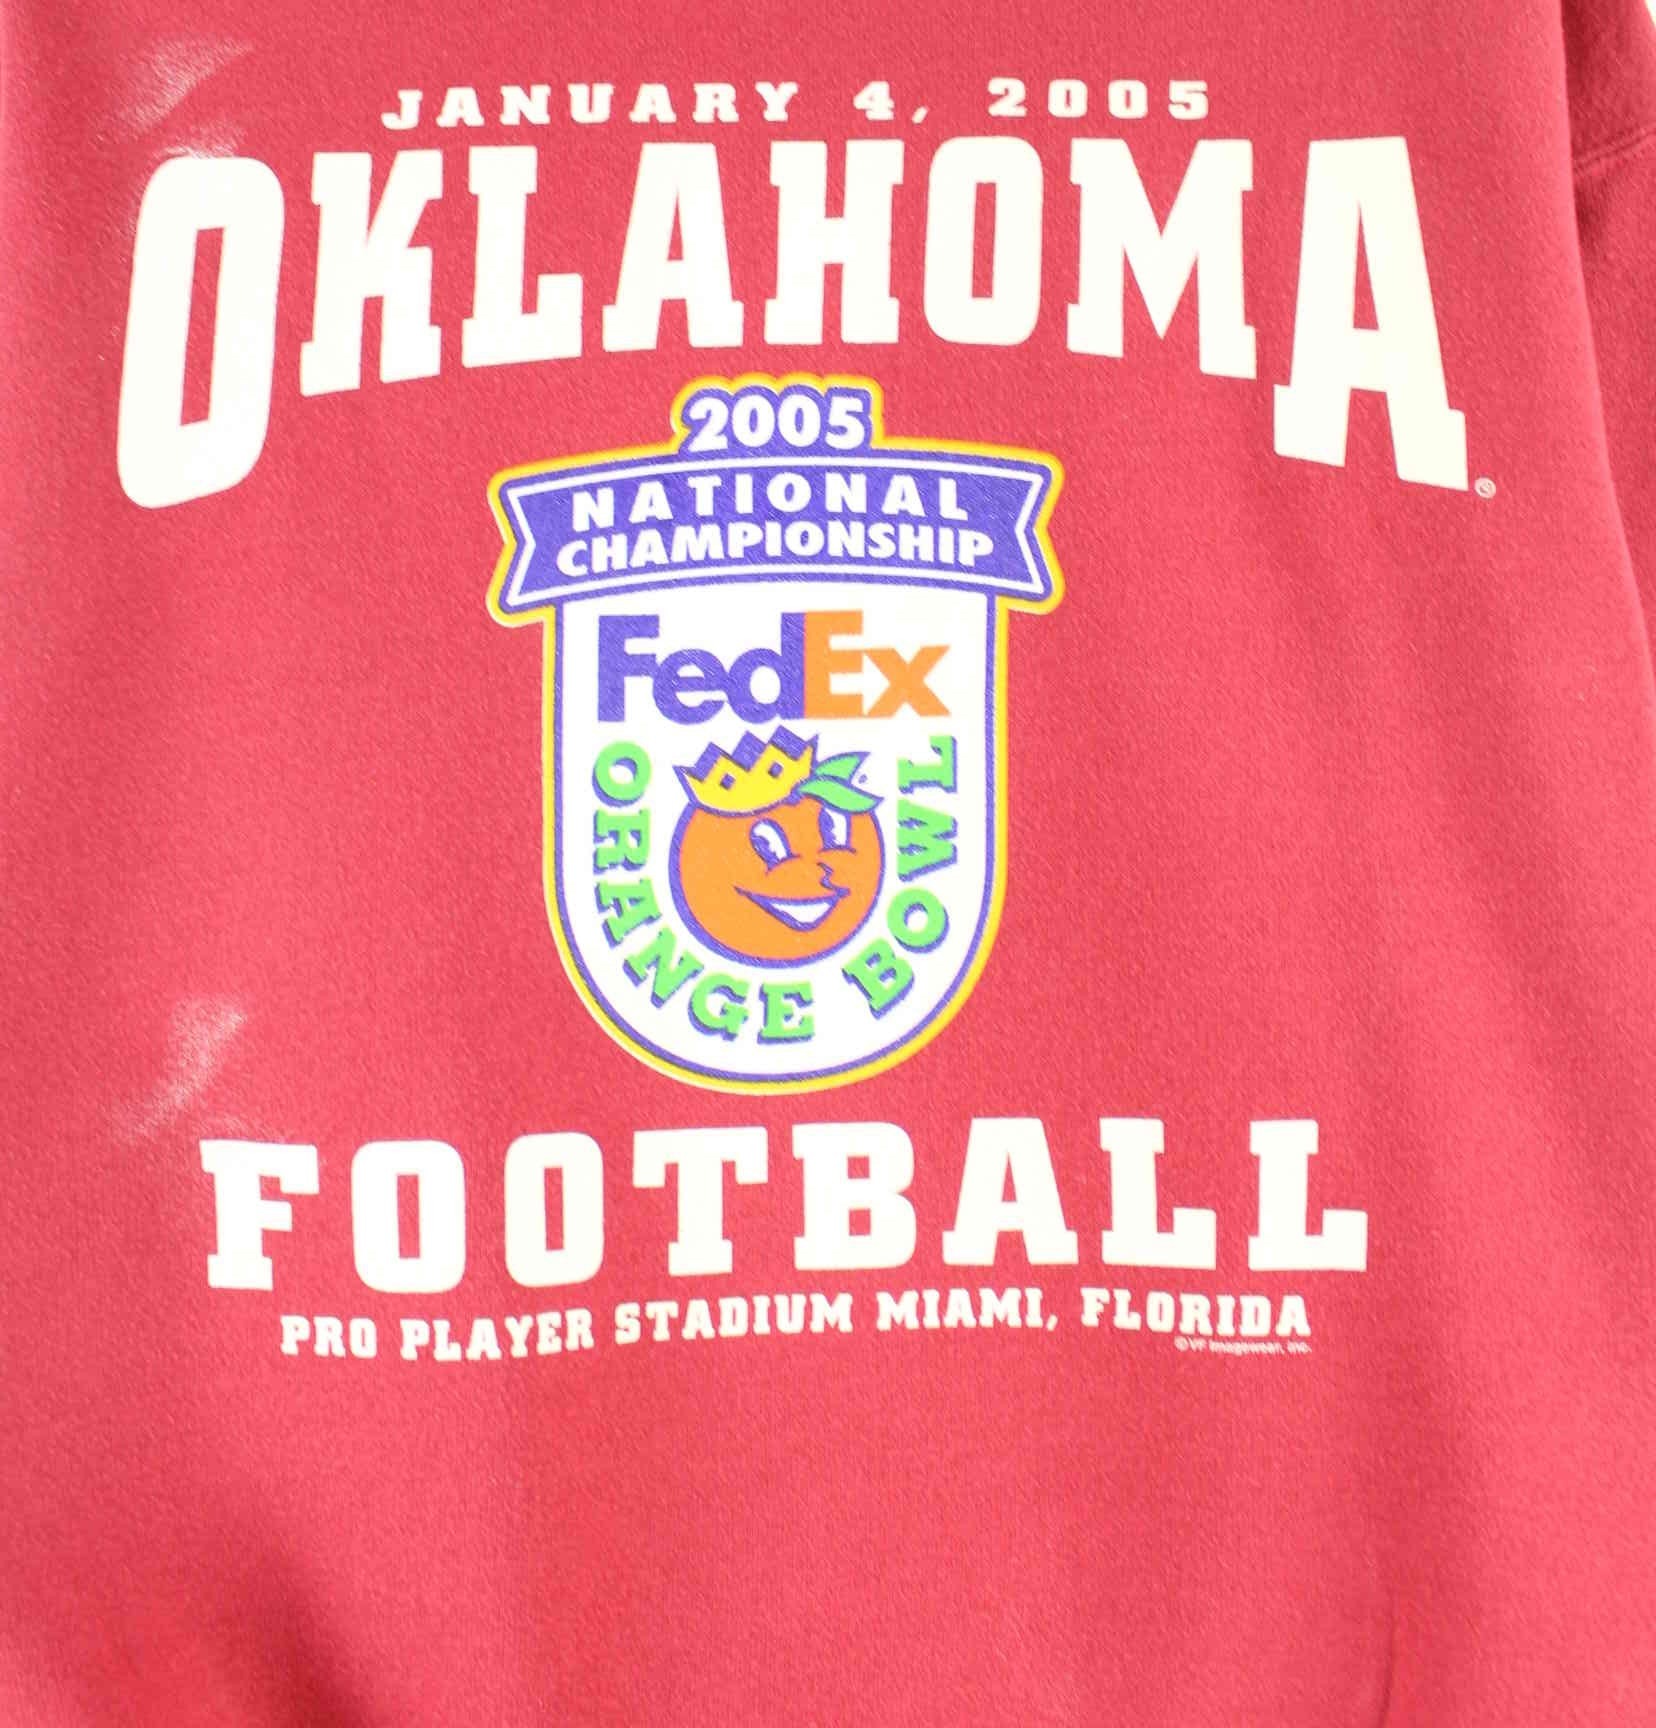 Lee Oklahoma Football 2005 Print Sweater Rot S (detail image 1)